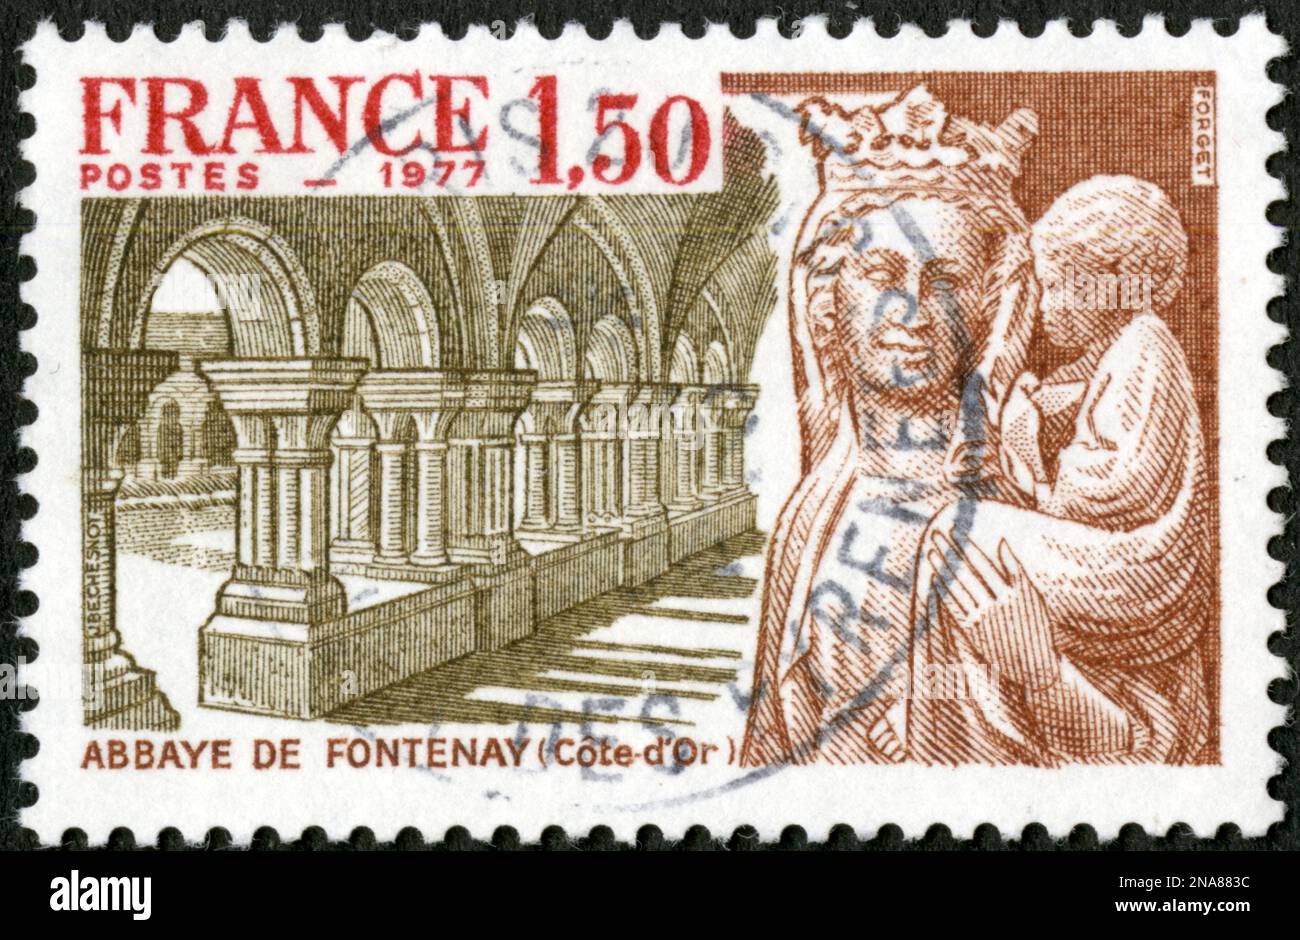 TIMBRE OBLITÉRÉ ABBAYE DE FONTENAY. CÔTE D'OR. FRANCE. POSTES. 1977. 1,50 Stock Photo